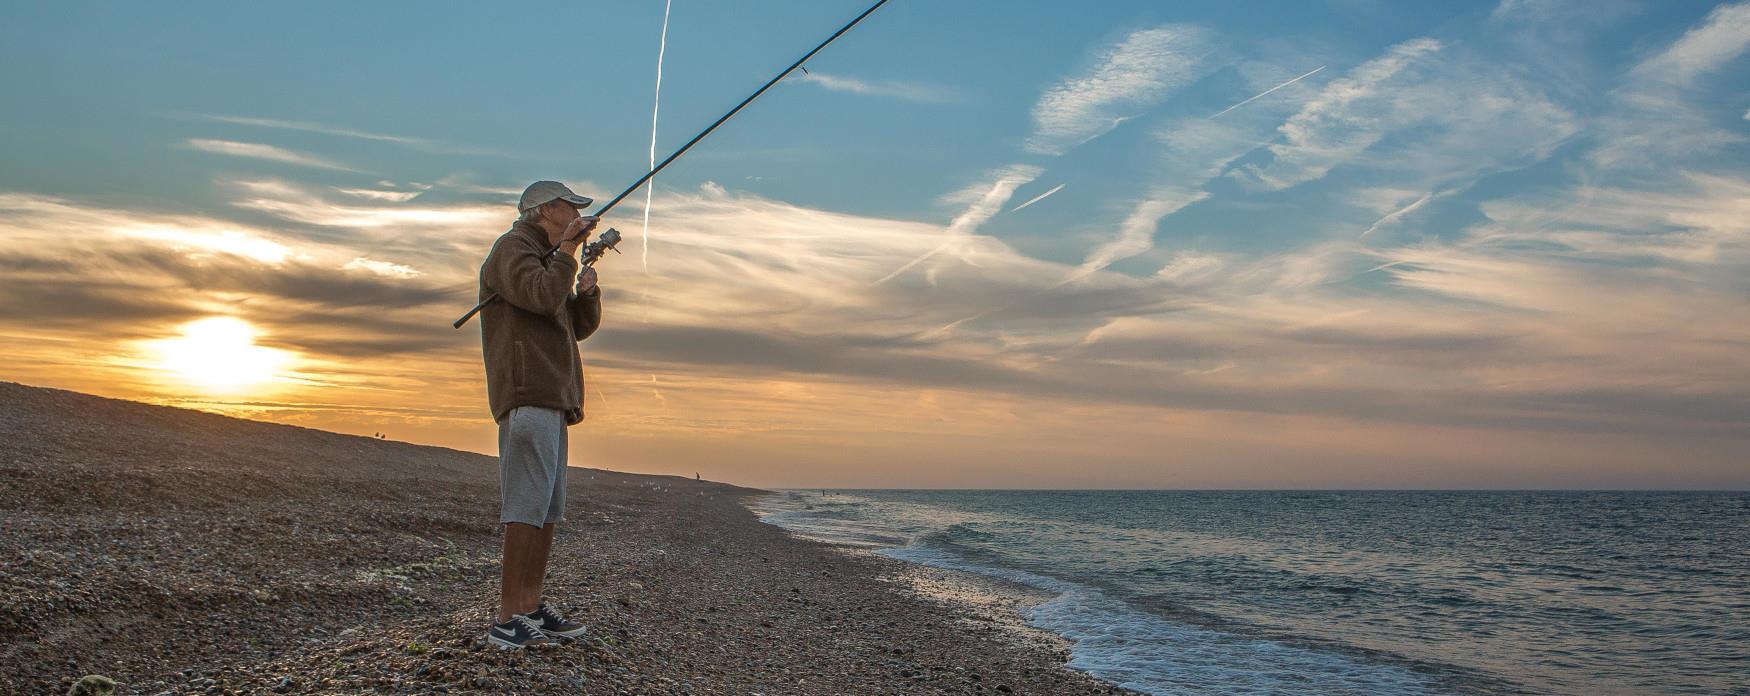 Fishing in North Norfolk - North Norfolk